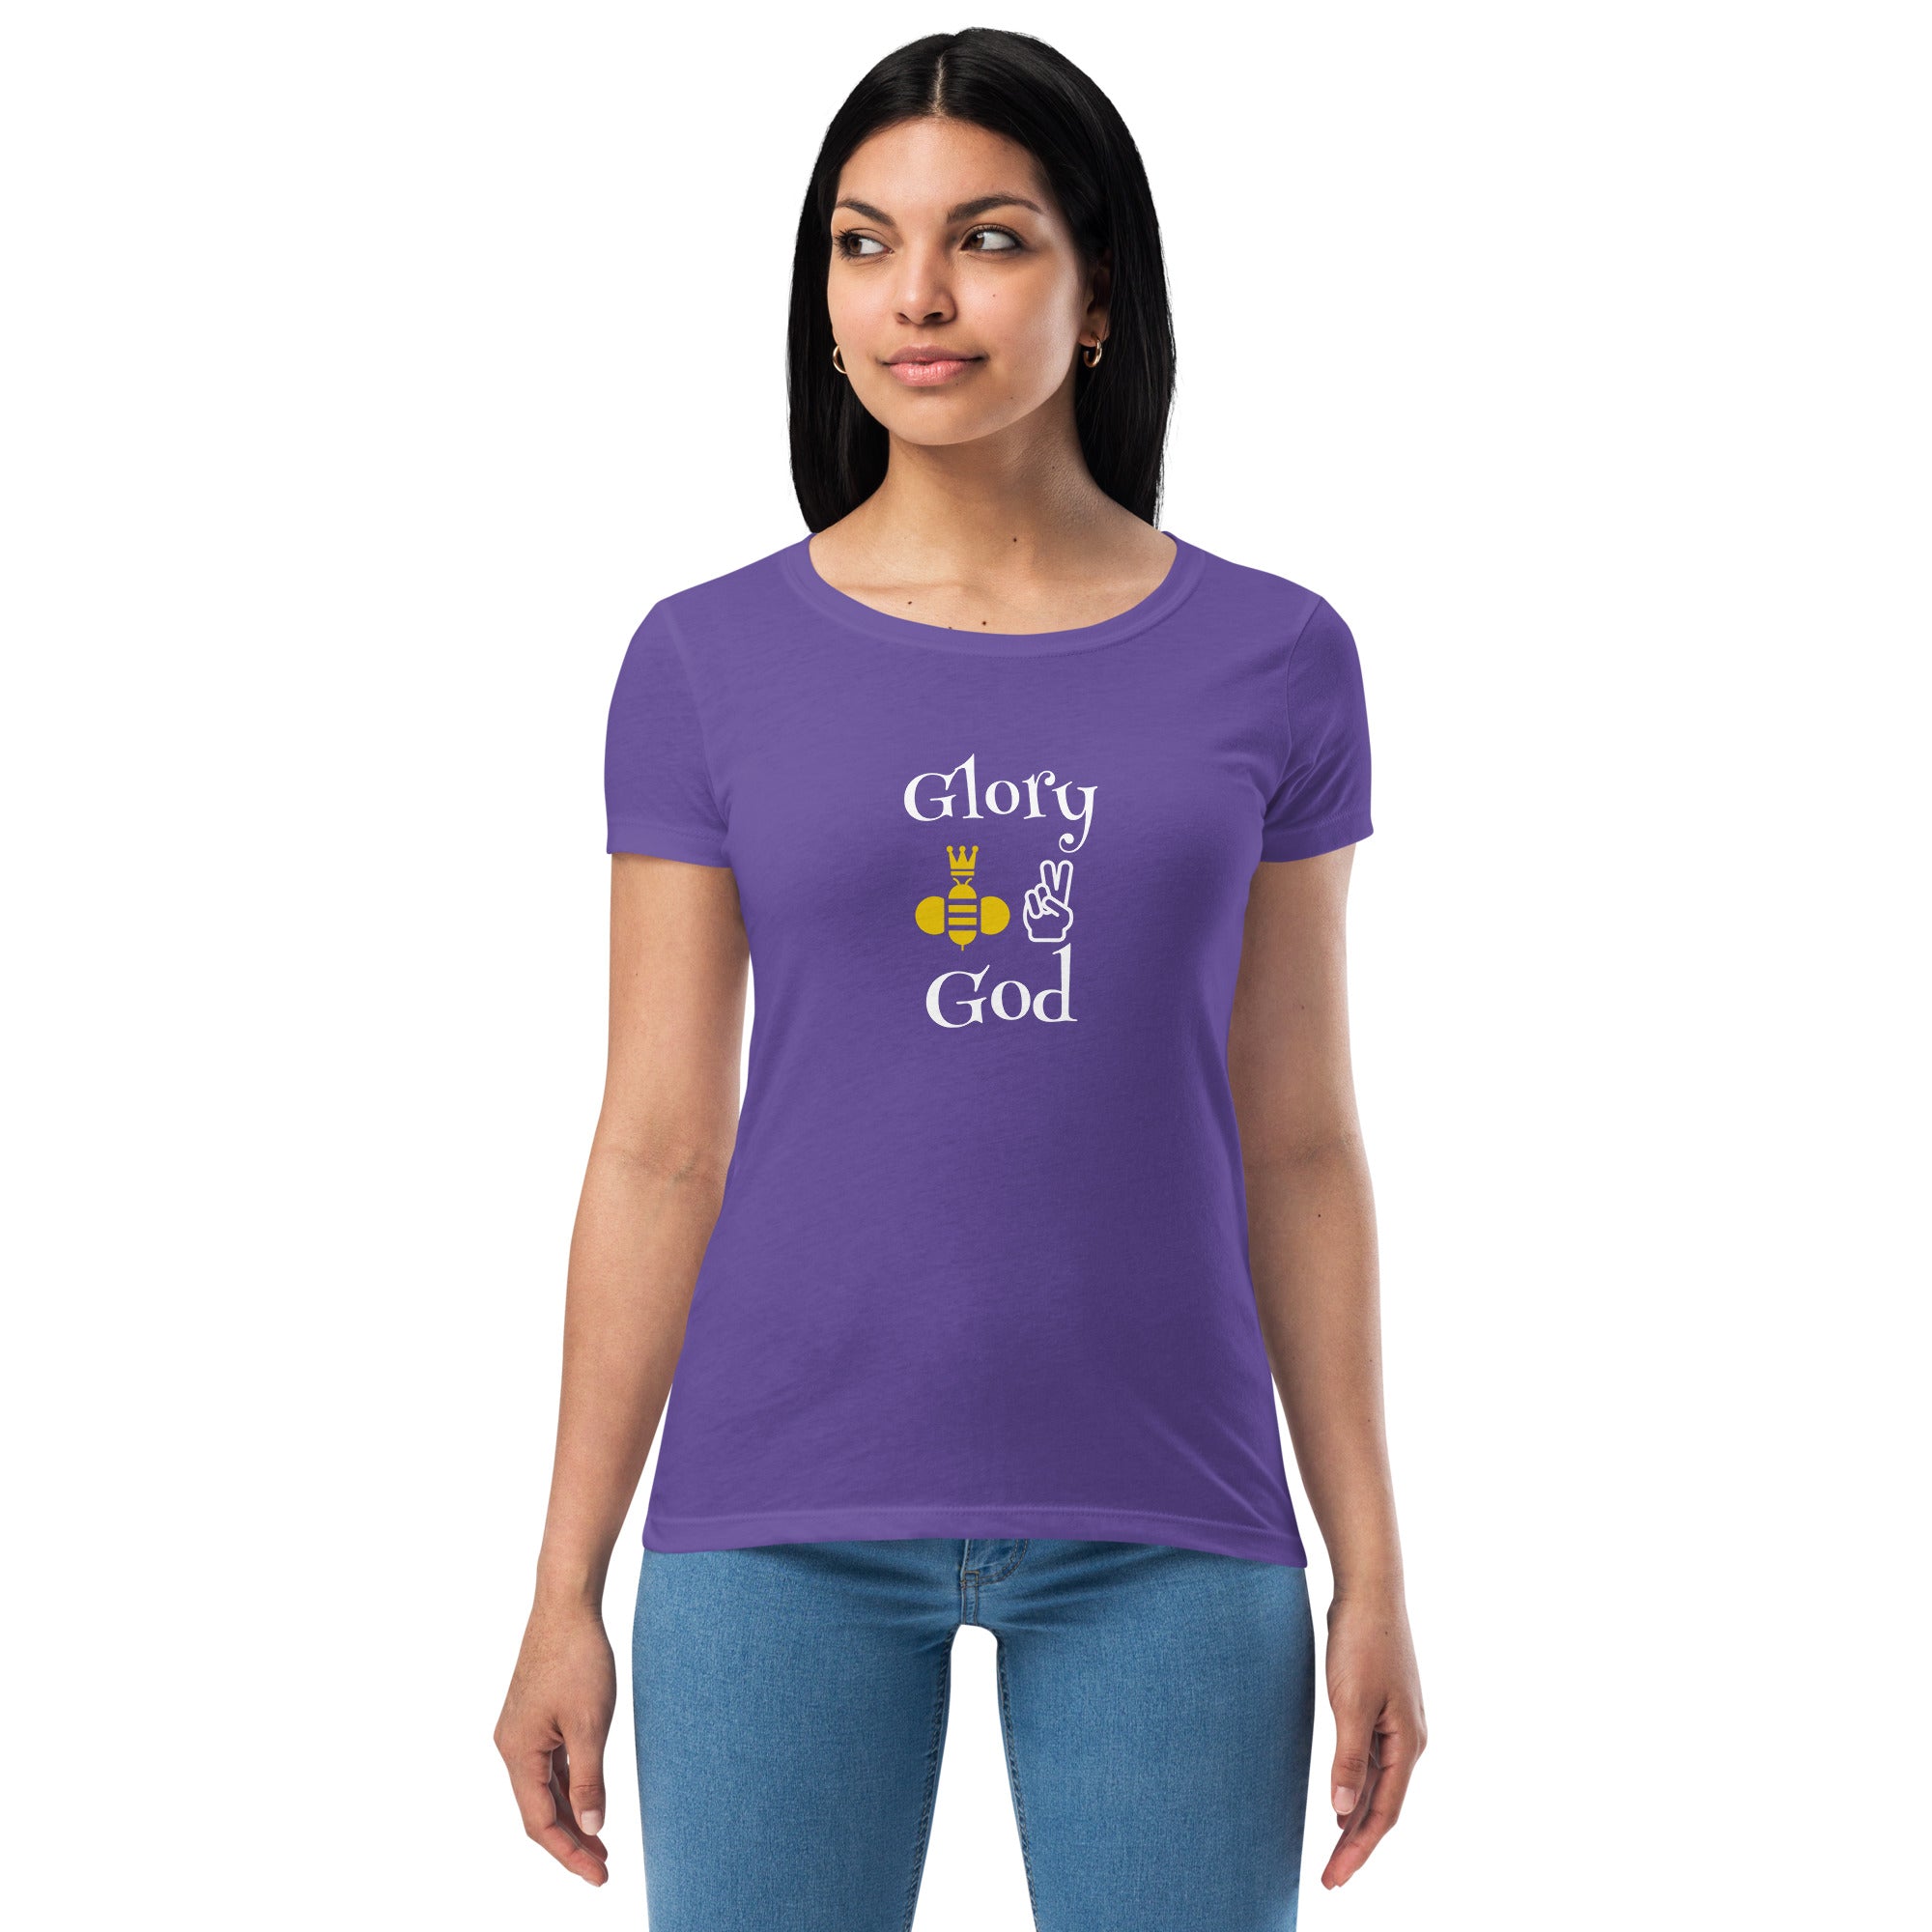 Glory B 2 God Women’s fitted t-shirt